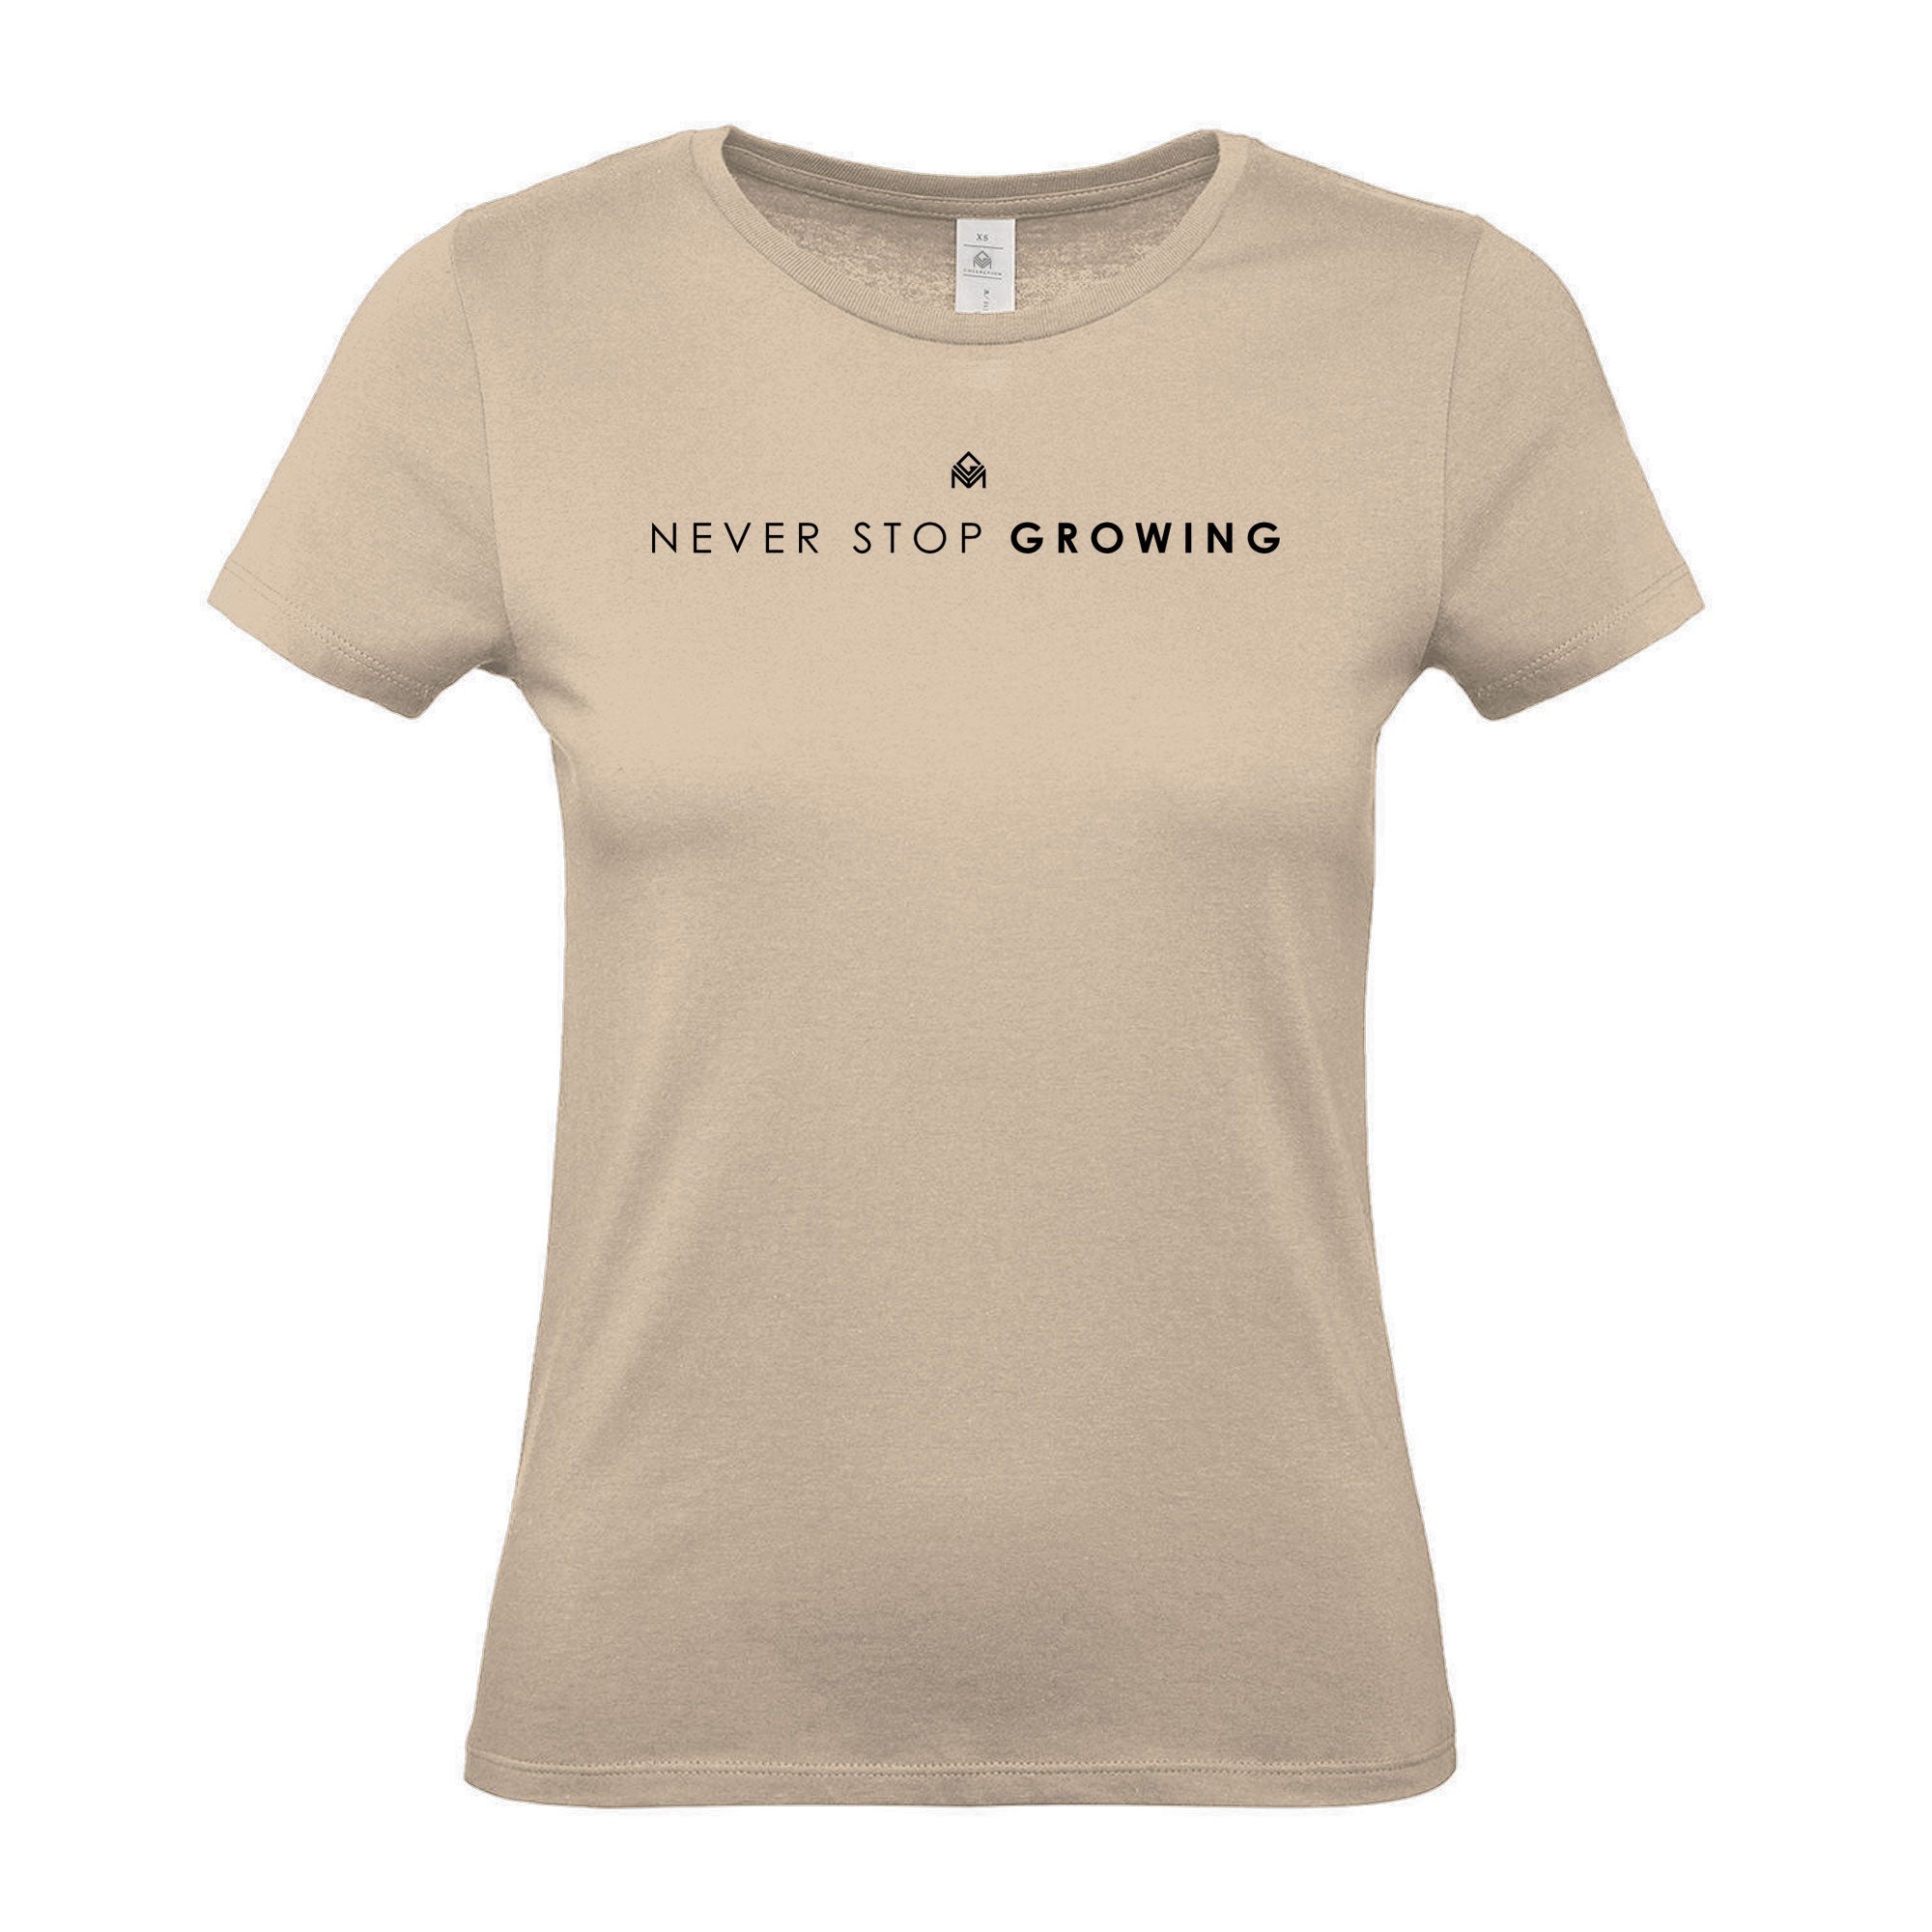 Never Stop Growing - Women's Gym T-Shirt